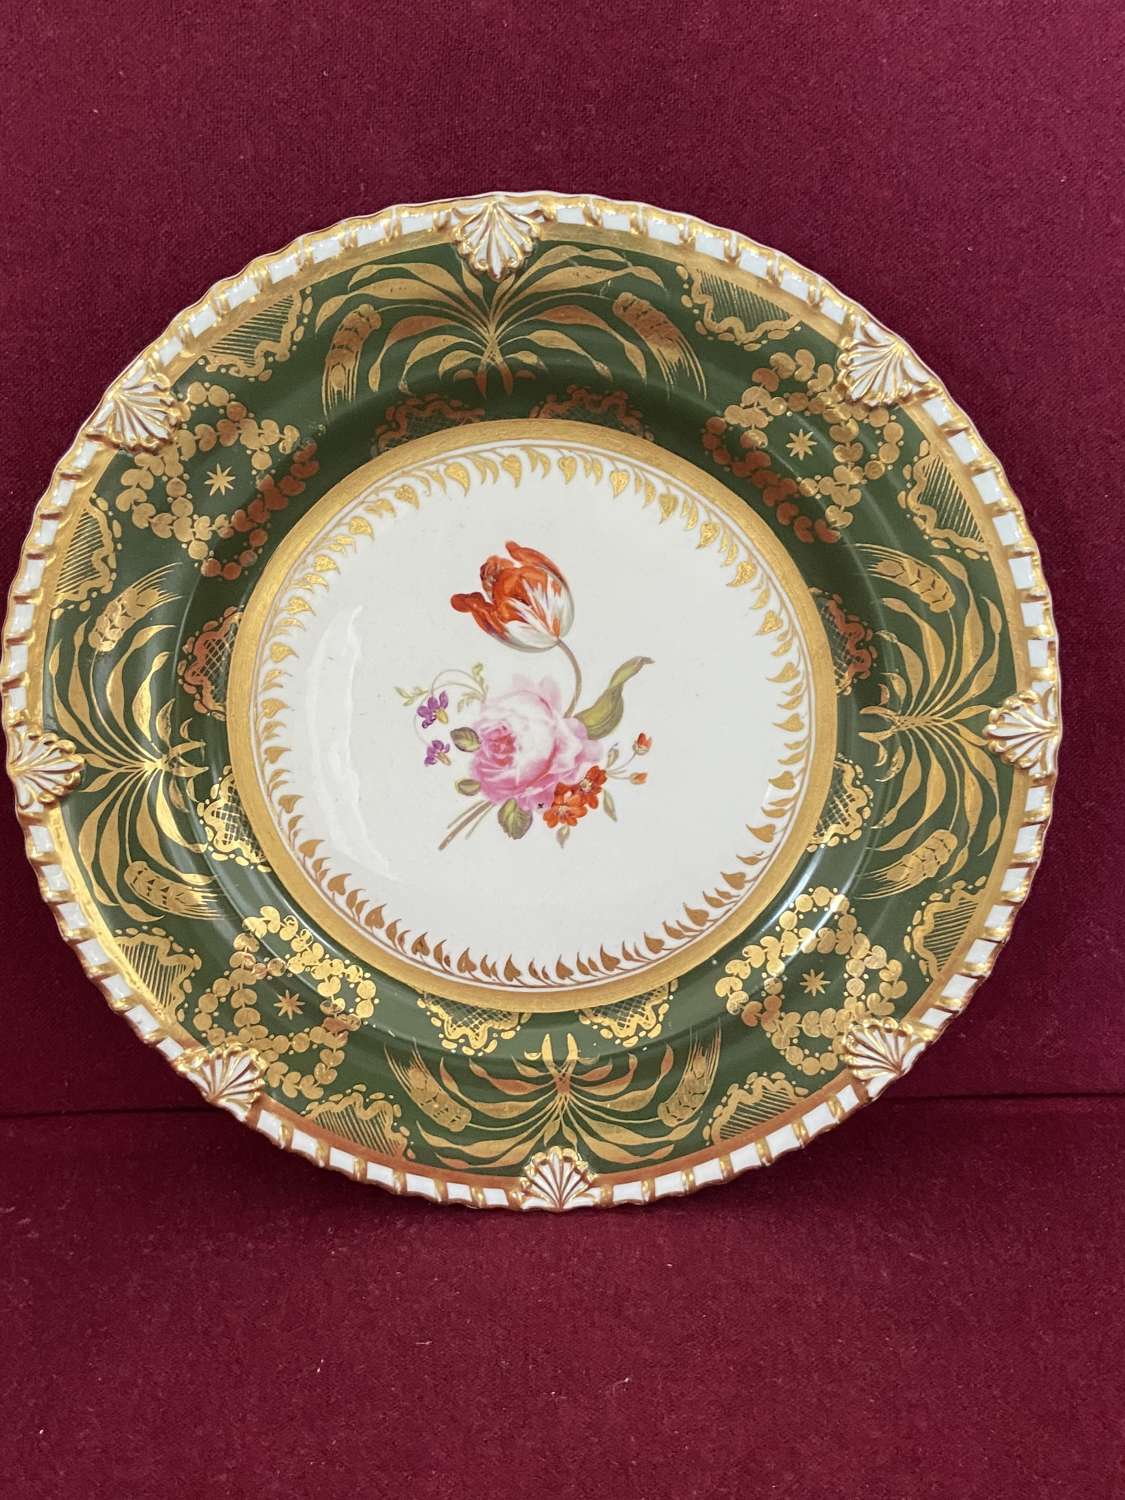 A Rockingham Porcelain Dessert Plate c.1826